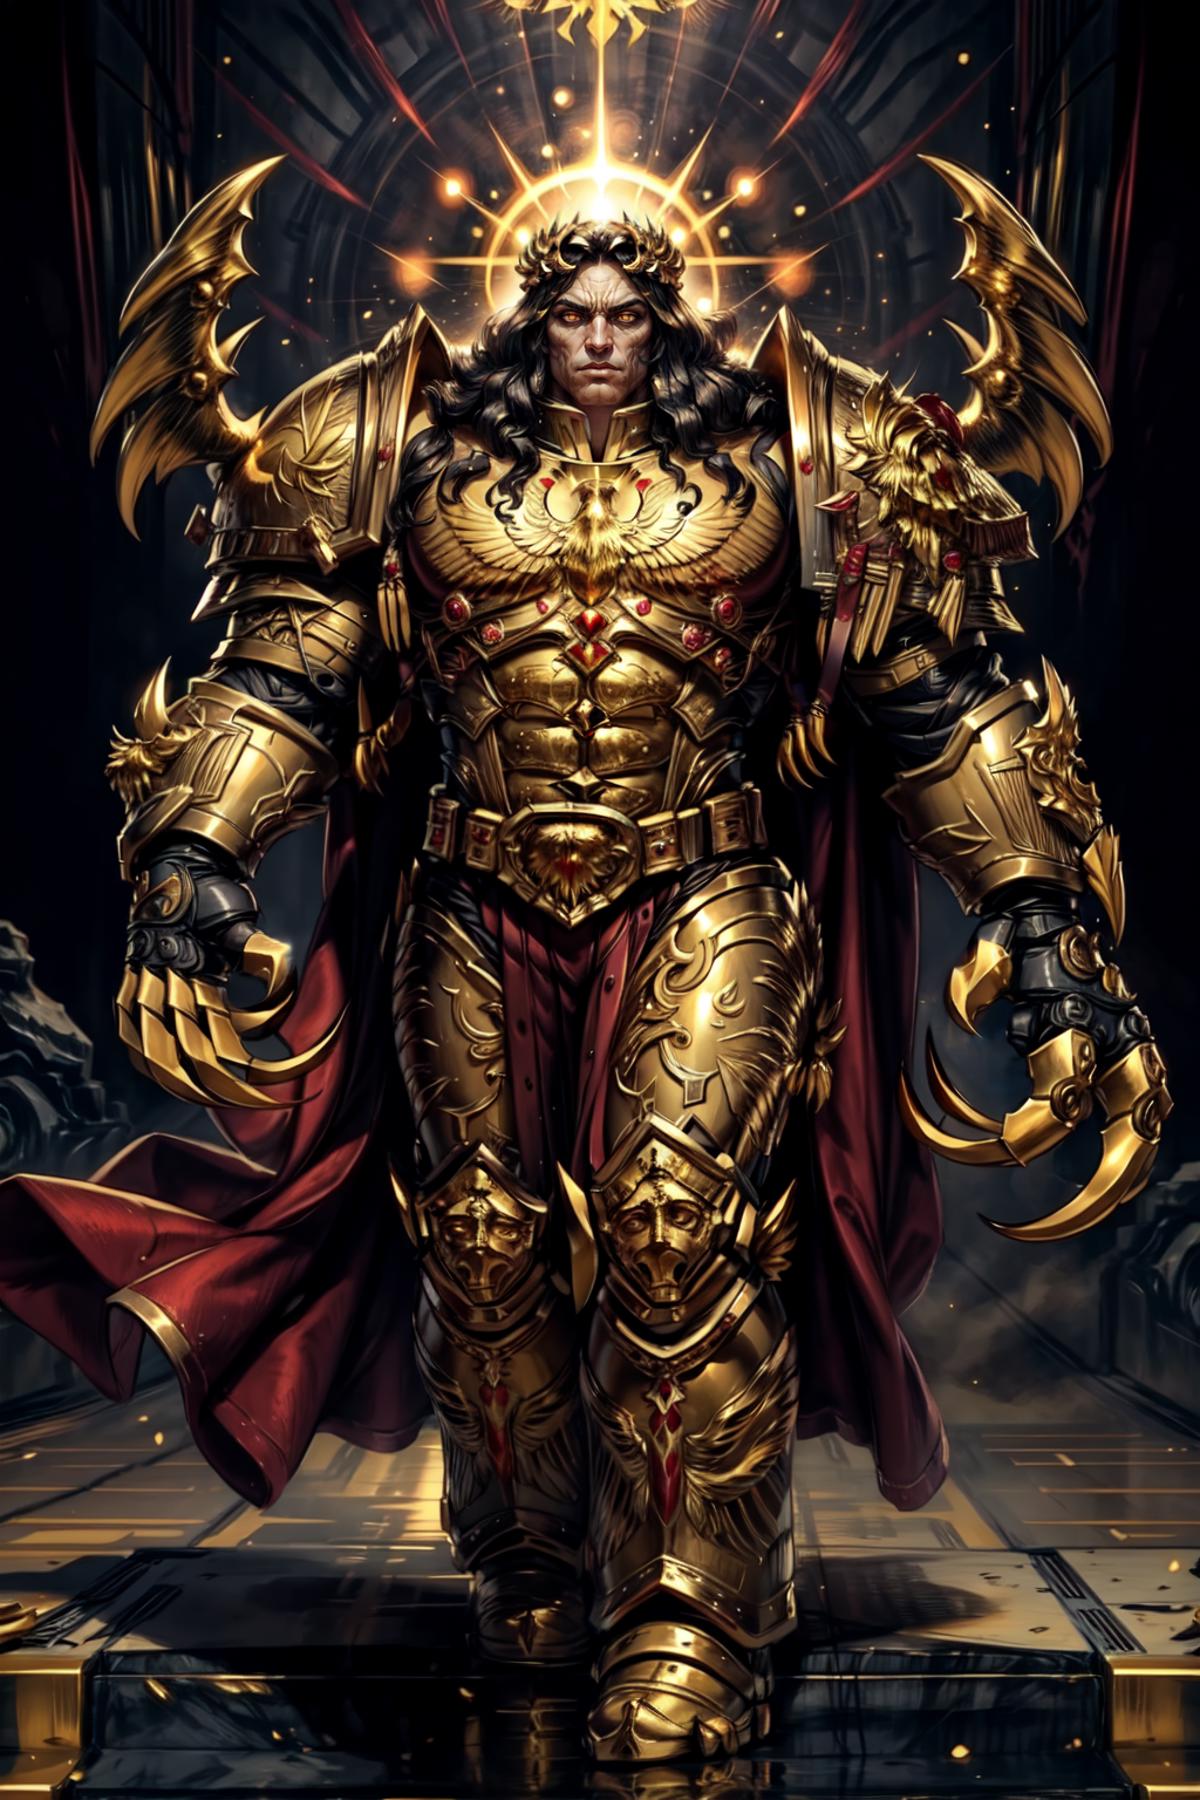 The Emperor of Mankind image by minecraftproboss3600